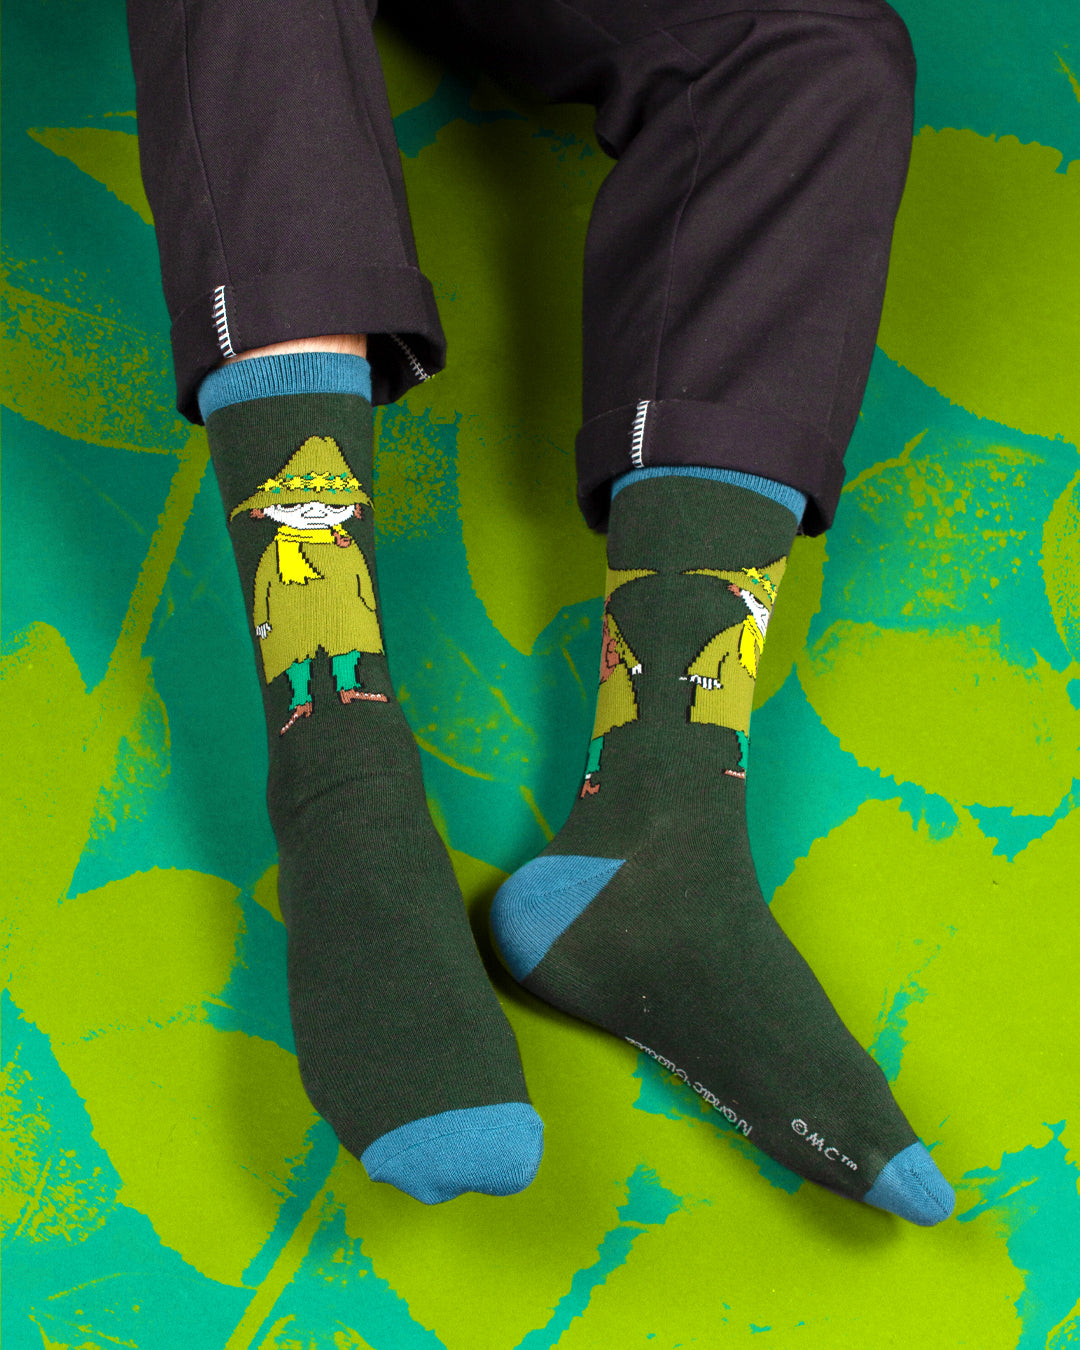 [Moomin] Snufkin Journey Men's Classic Socks Green